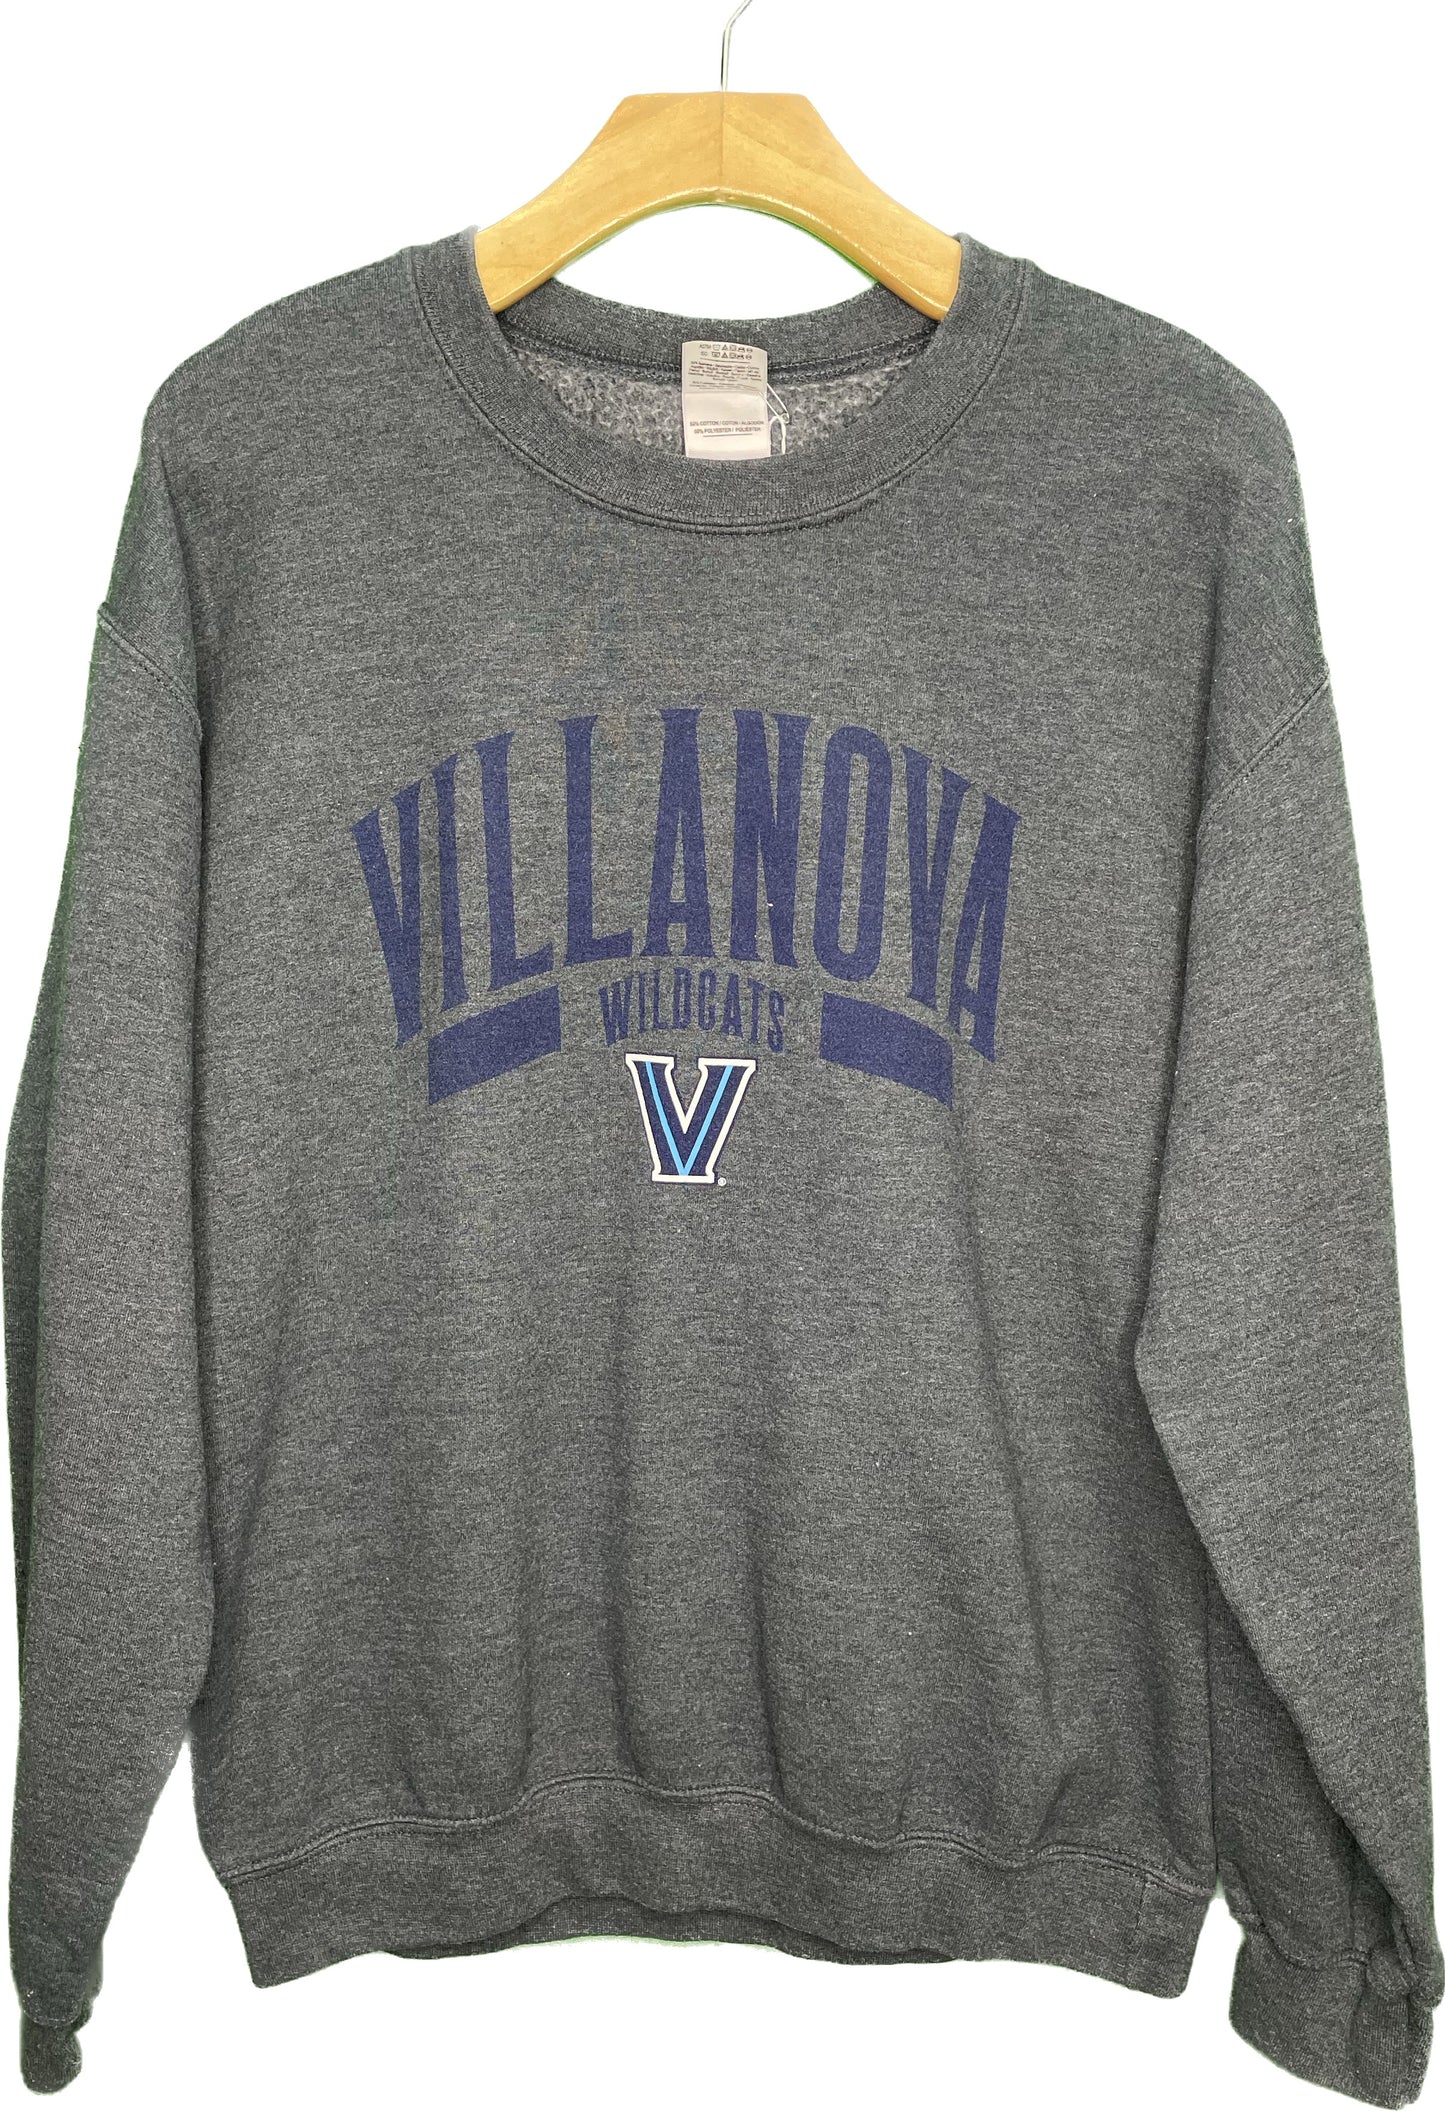 Vintage Villanova Wildcats Crewneck Sweatshirt